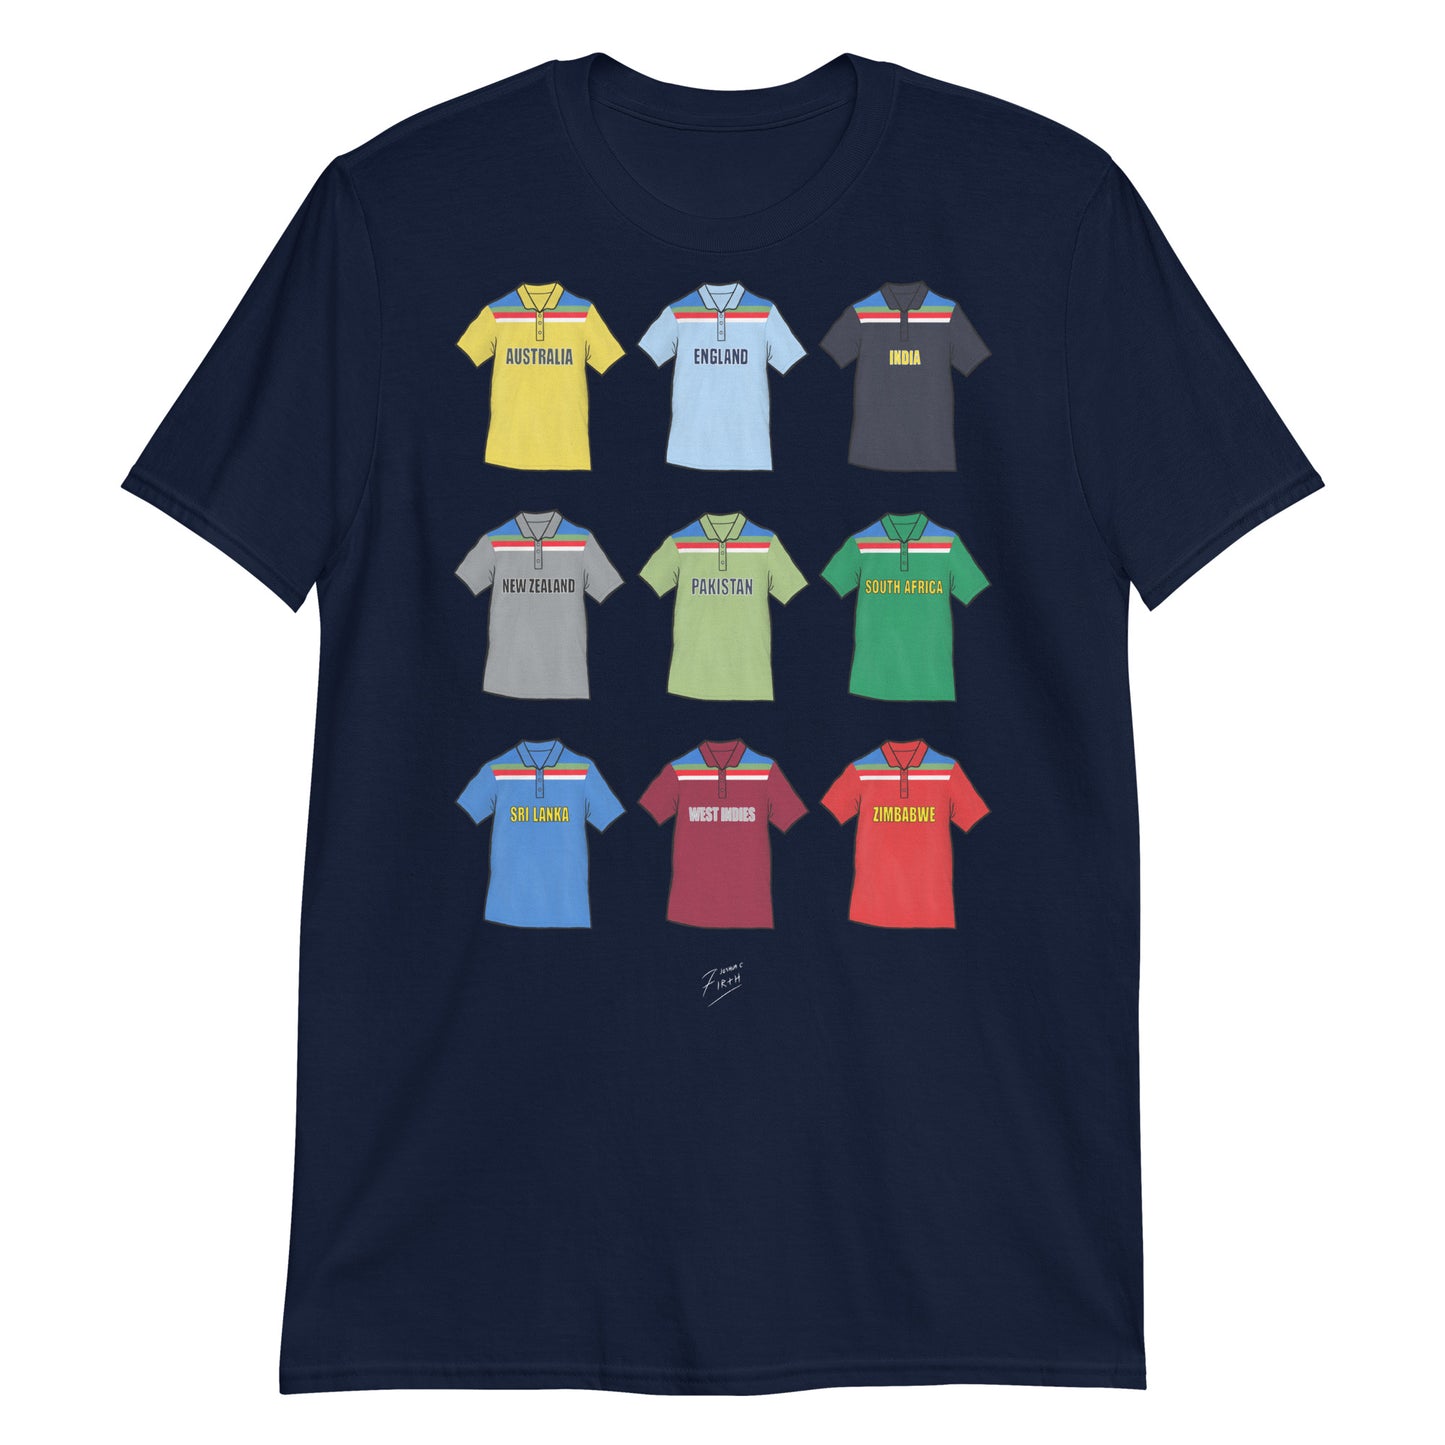 Navy Blue Cricket T-shirt with illustrated artwork on them. Featuring nations Australia, England, India, New Zealand, Pakistan, South Africa, Sri Lanka, West Indies & Zimbabwe